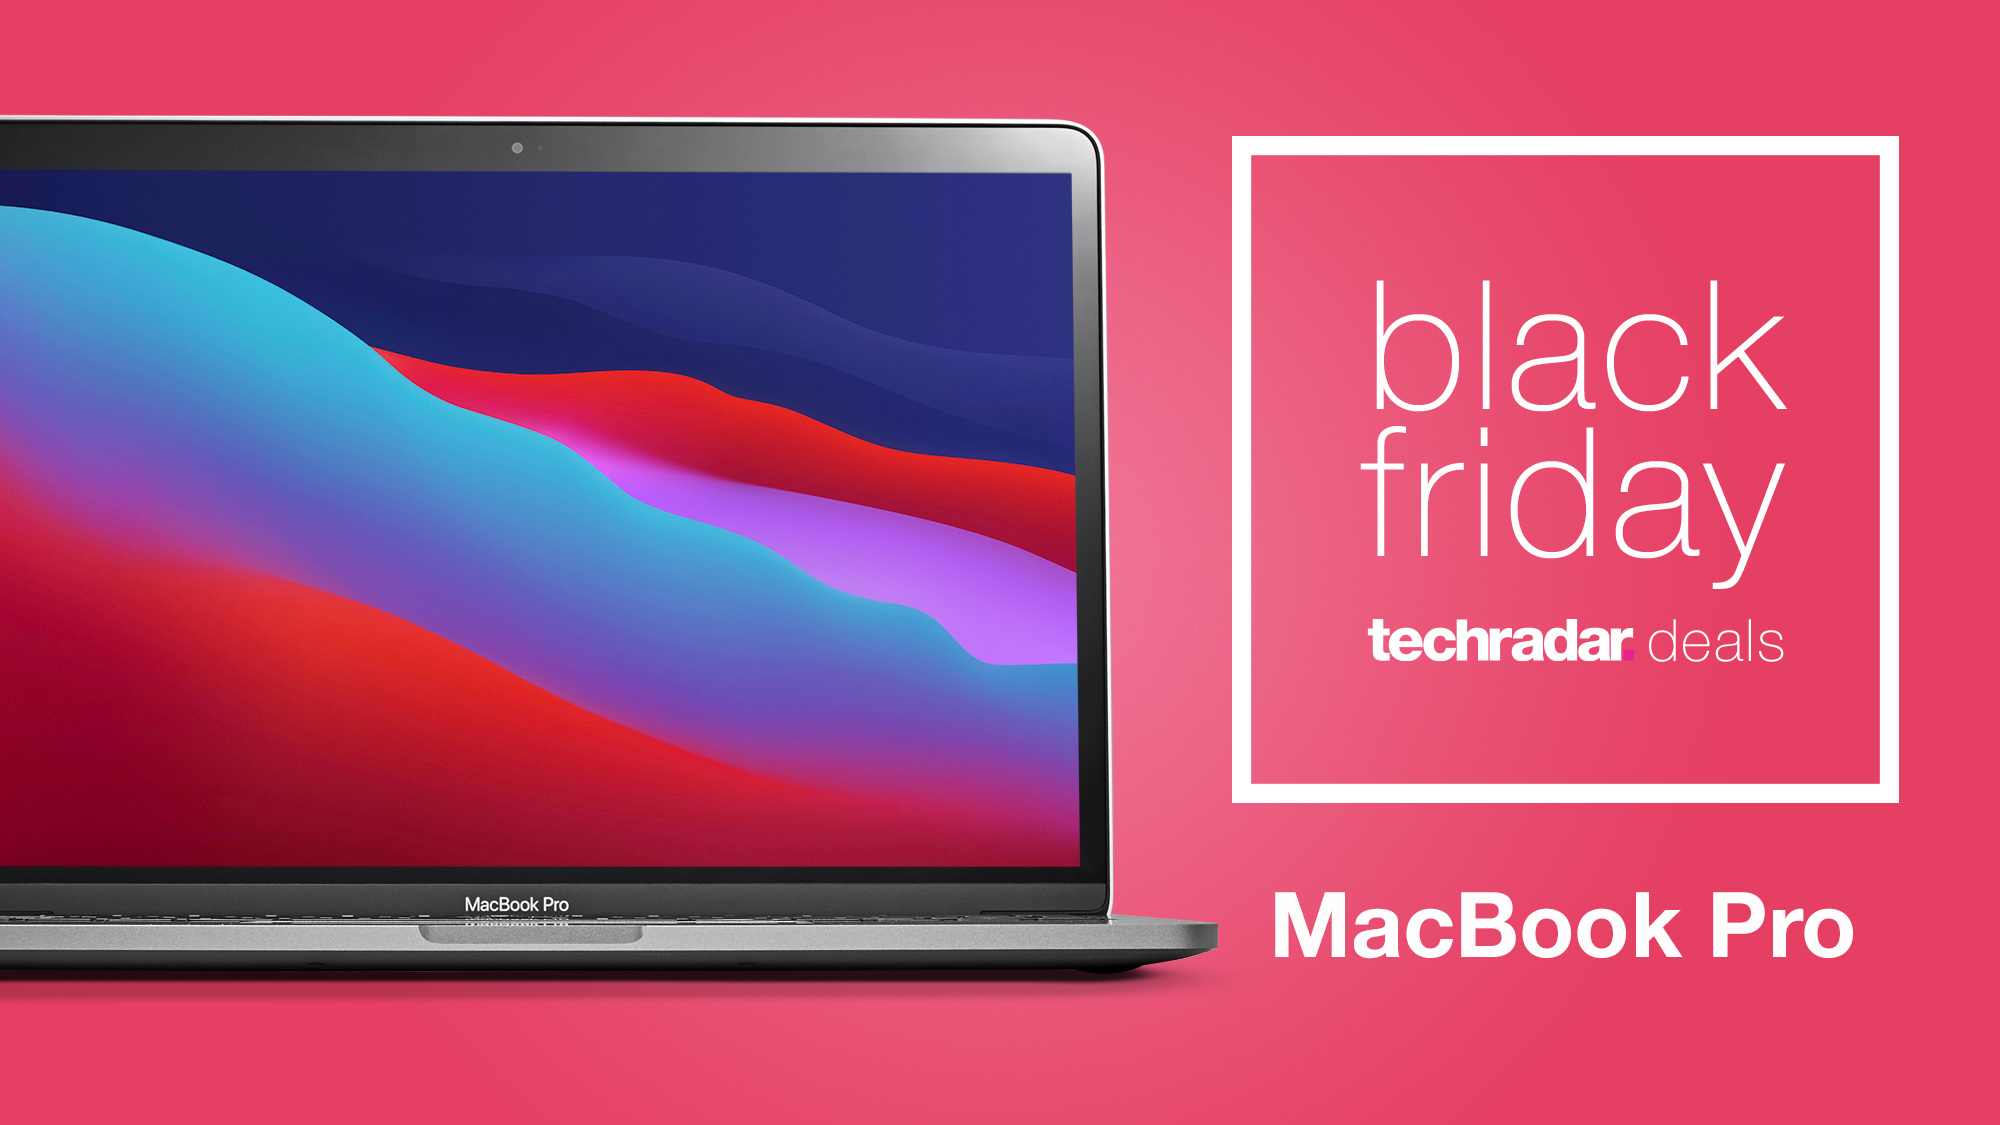 Apple macbook pro deals black friday what is retina display on the ipad